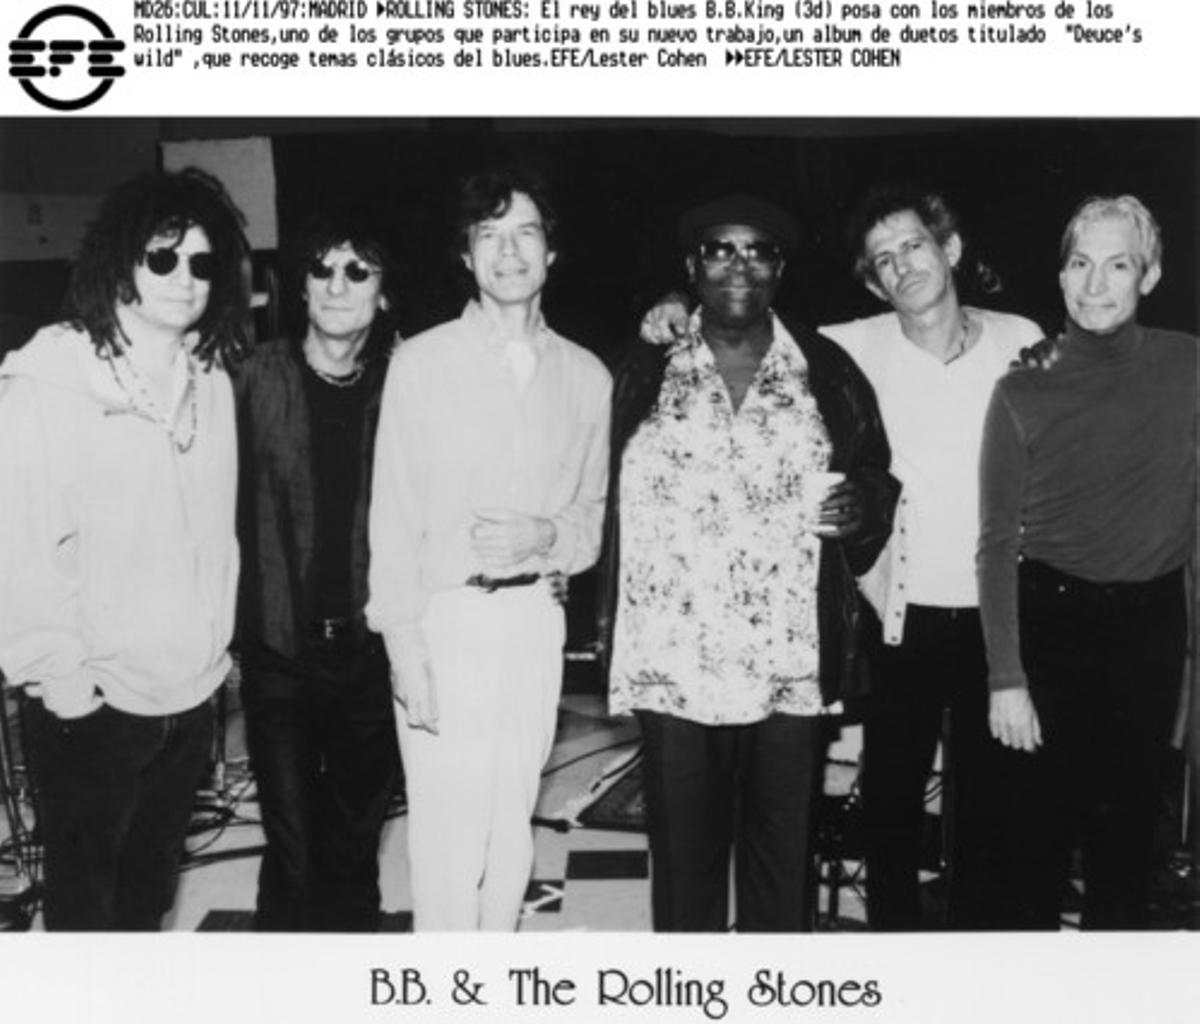 B. B. King posa con los Rolling Stones.